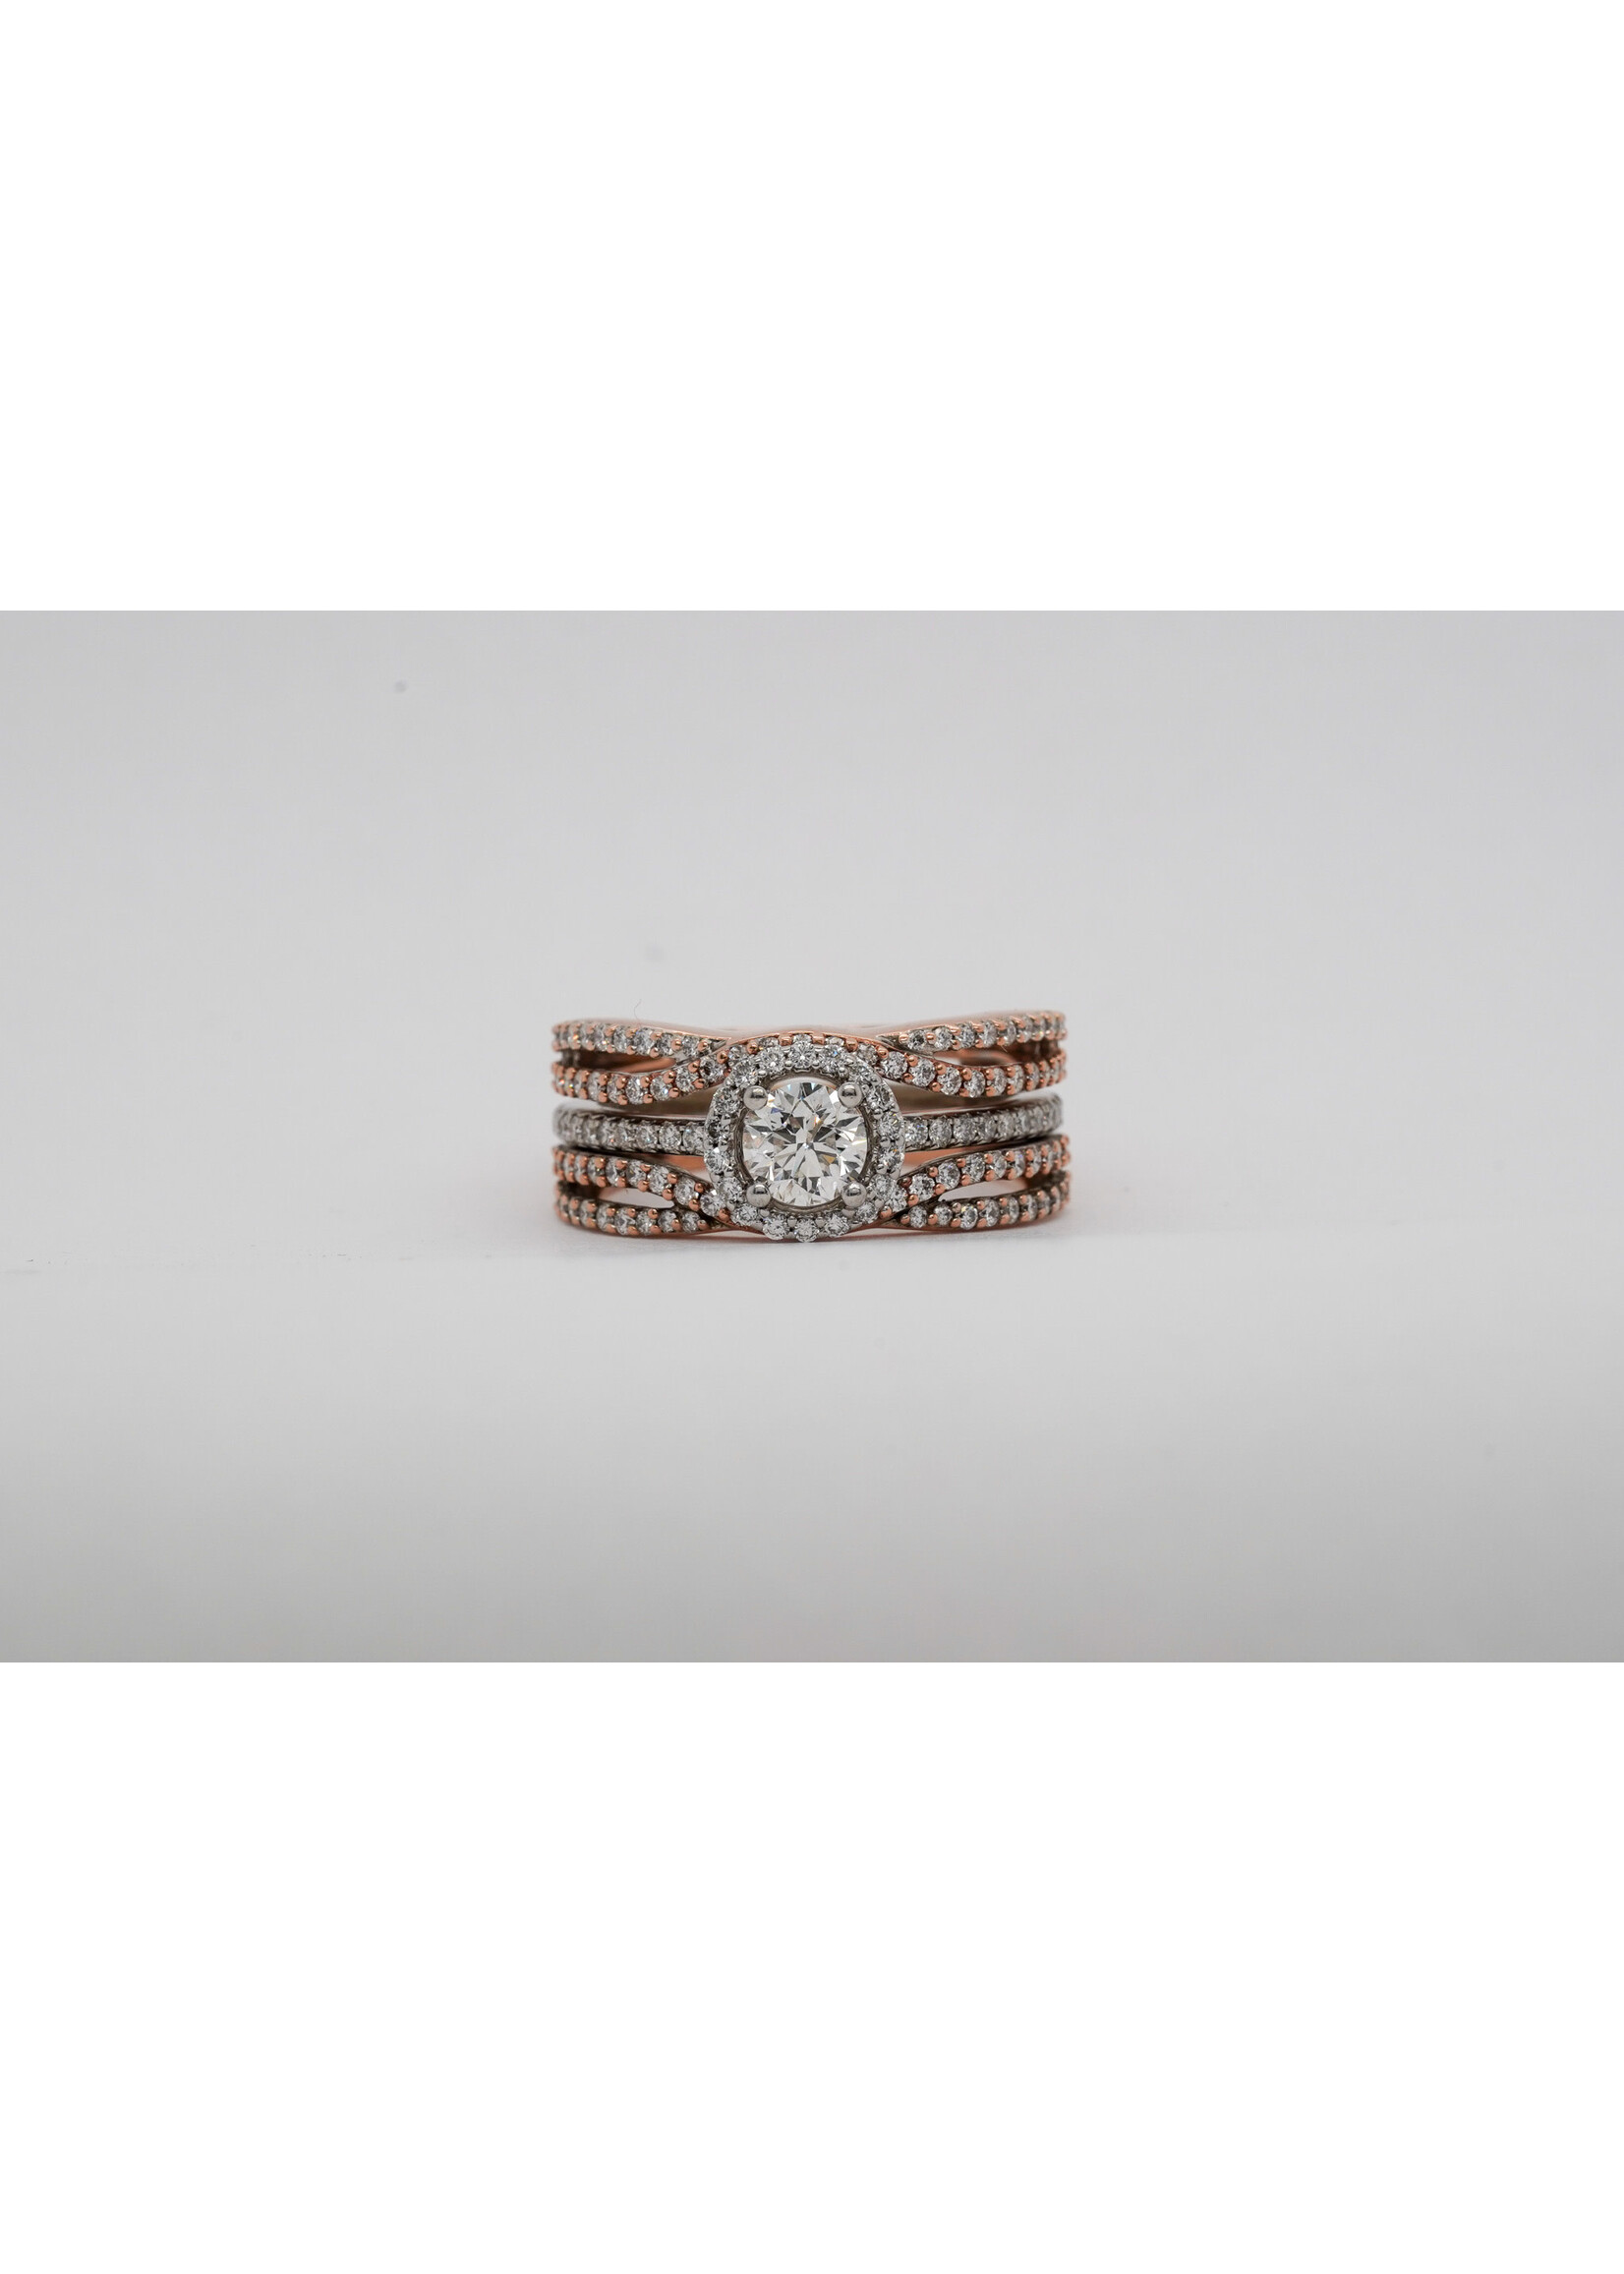 14KW/R 8.3g 1.50ctw (.50ctr) J/I1 Round Diamond Halo Engagement Ring & Wrap (size 6.75)